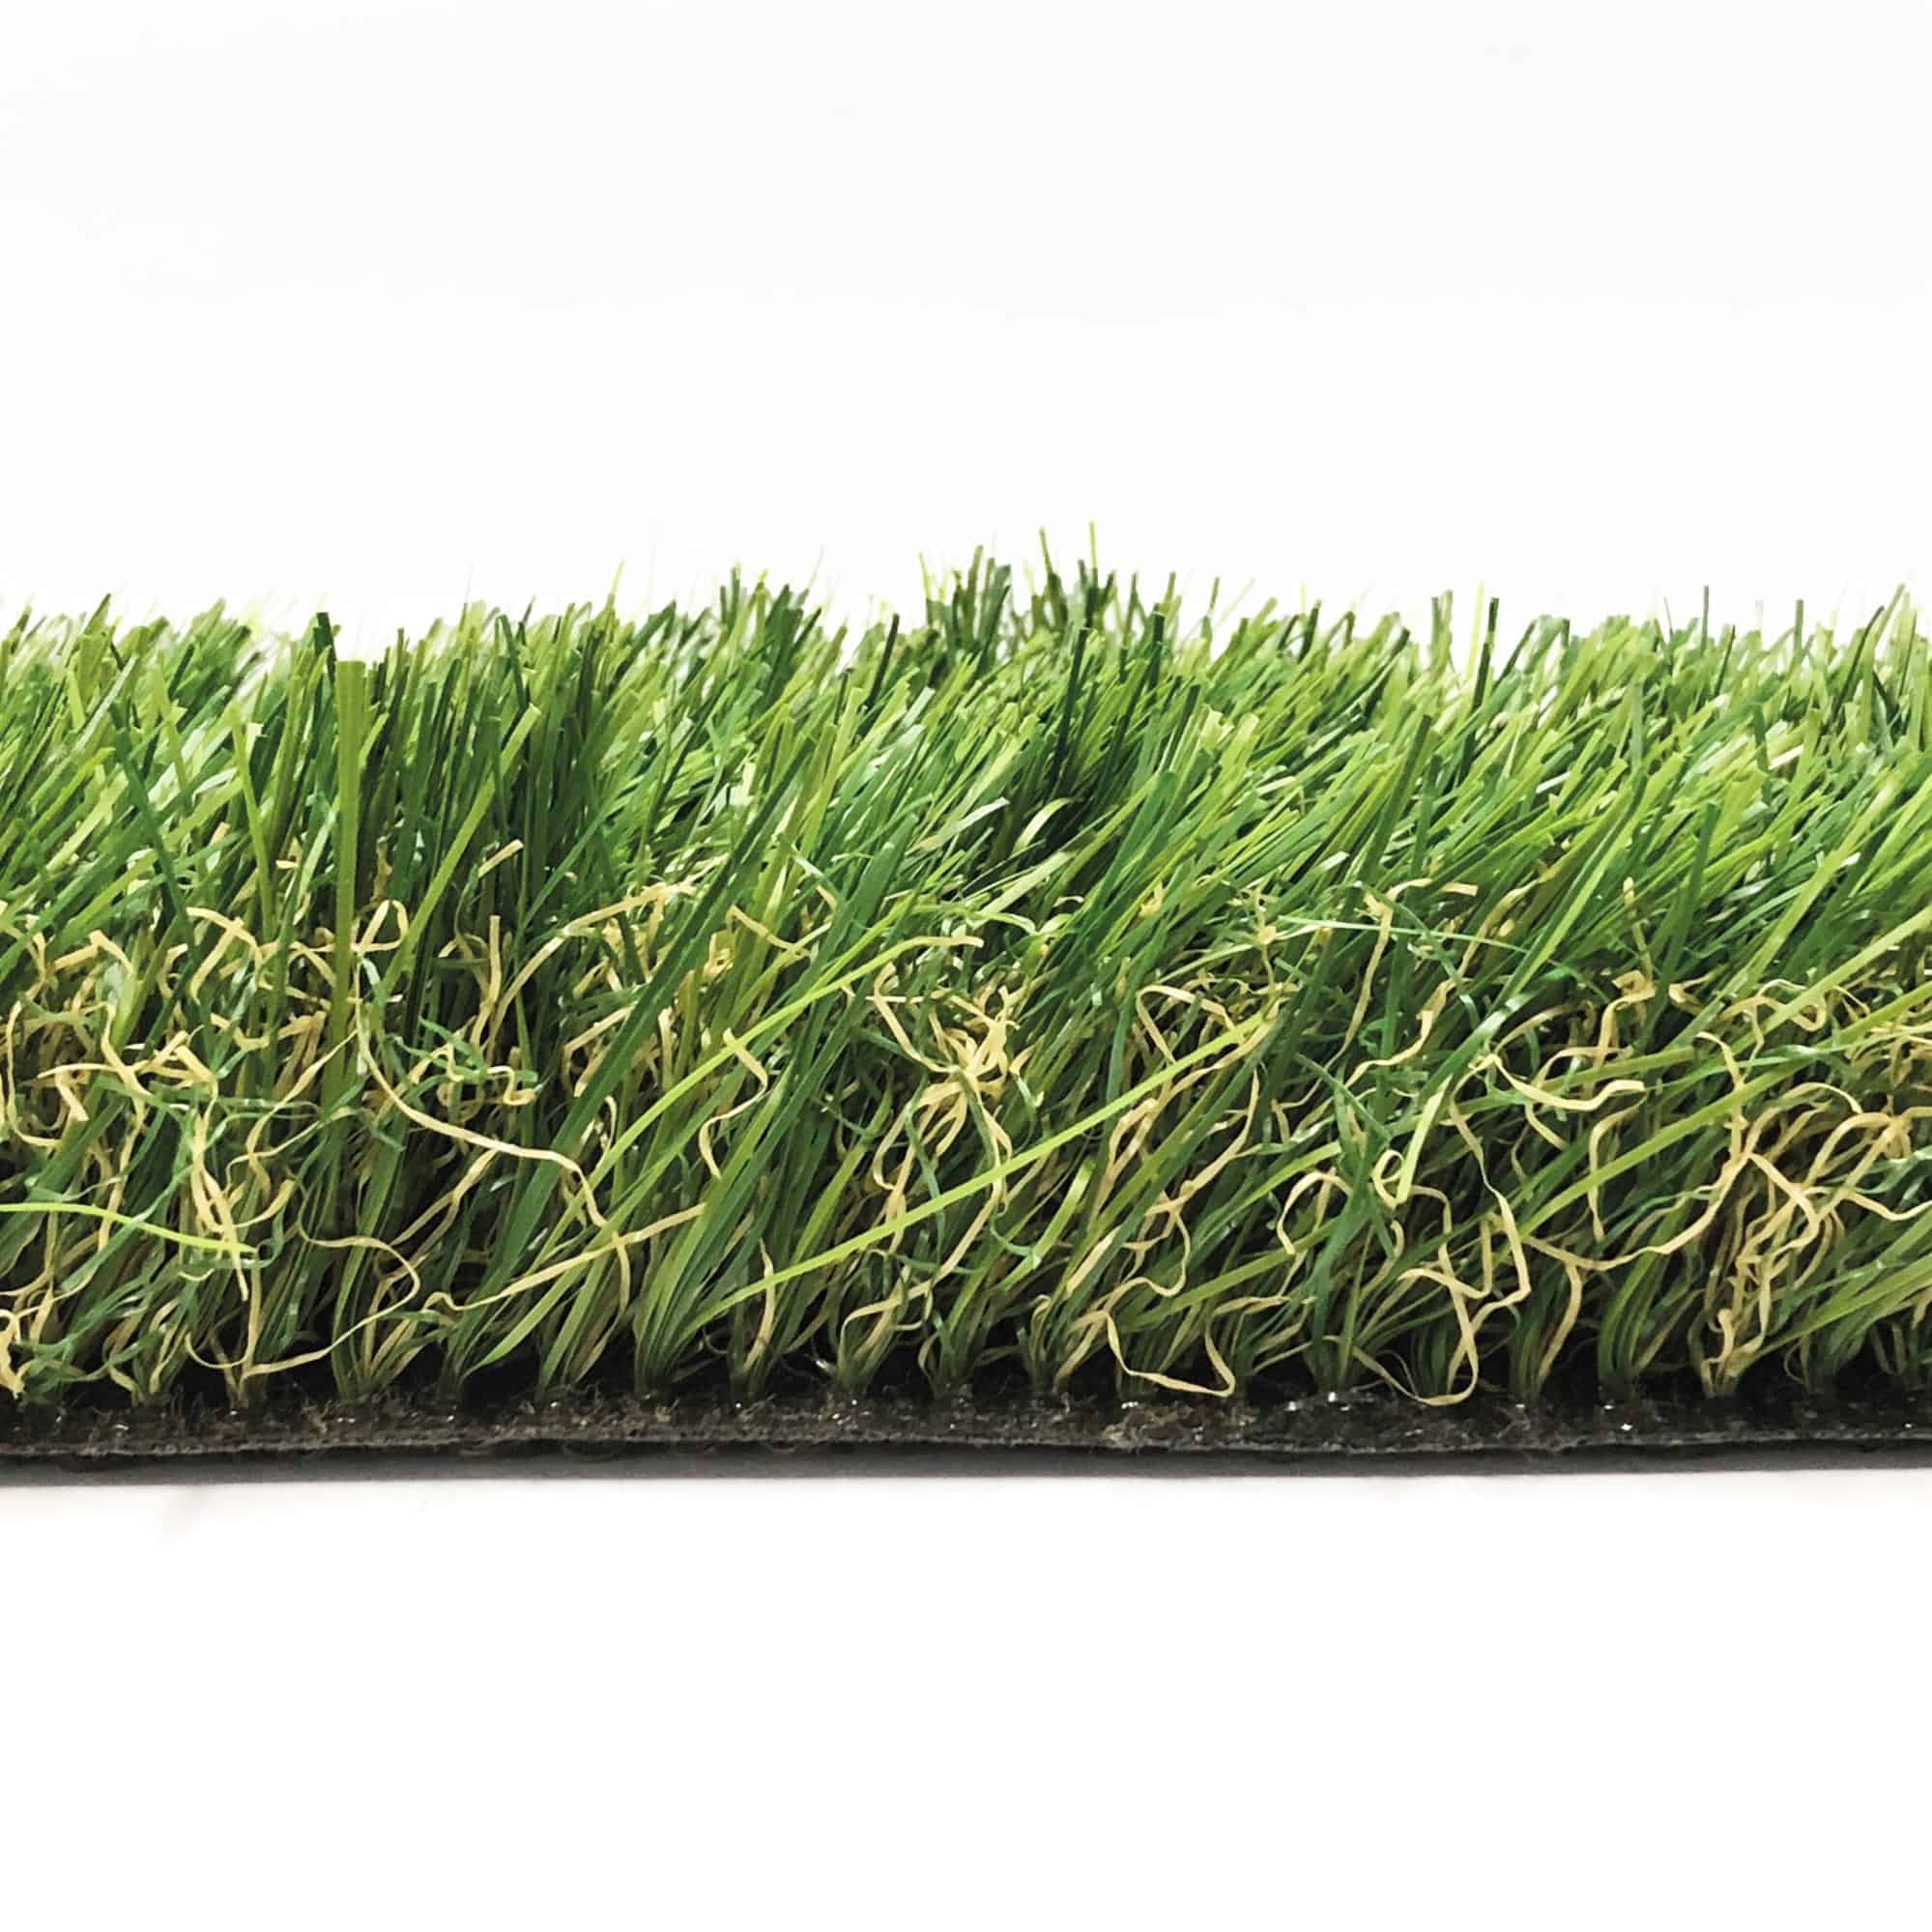 CORE Lawn Natural Artificial Grass 4m Wide Roll 15 m